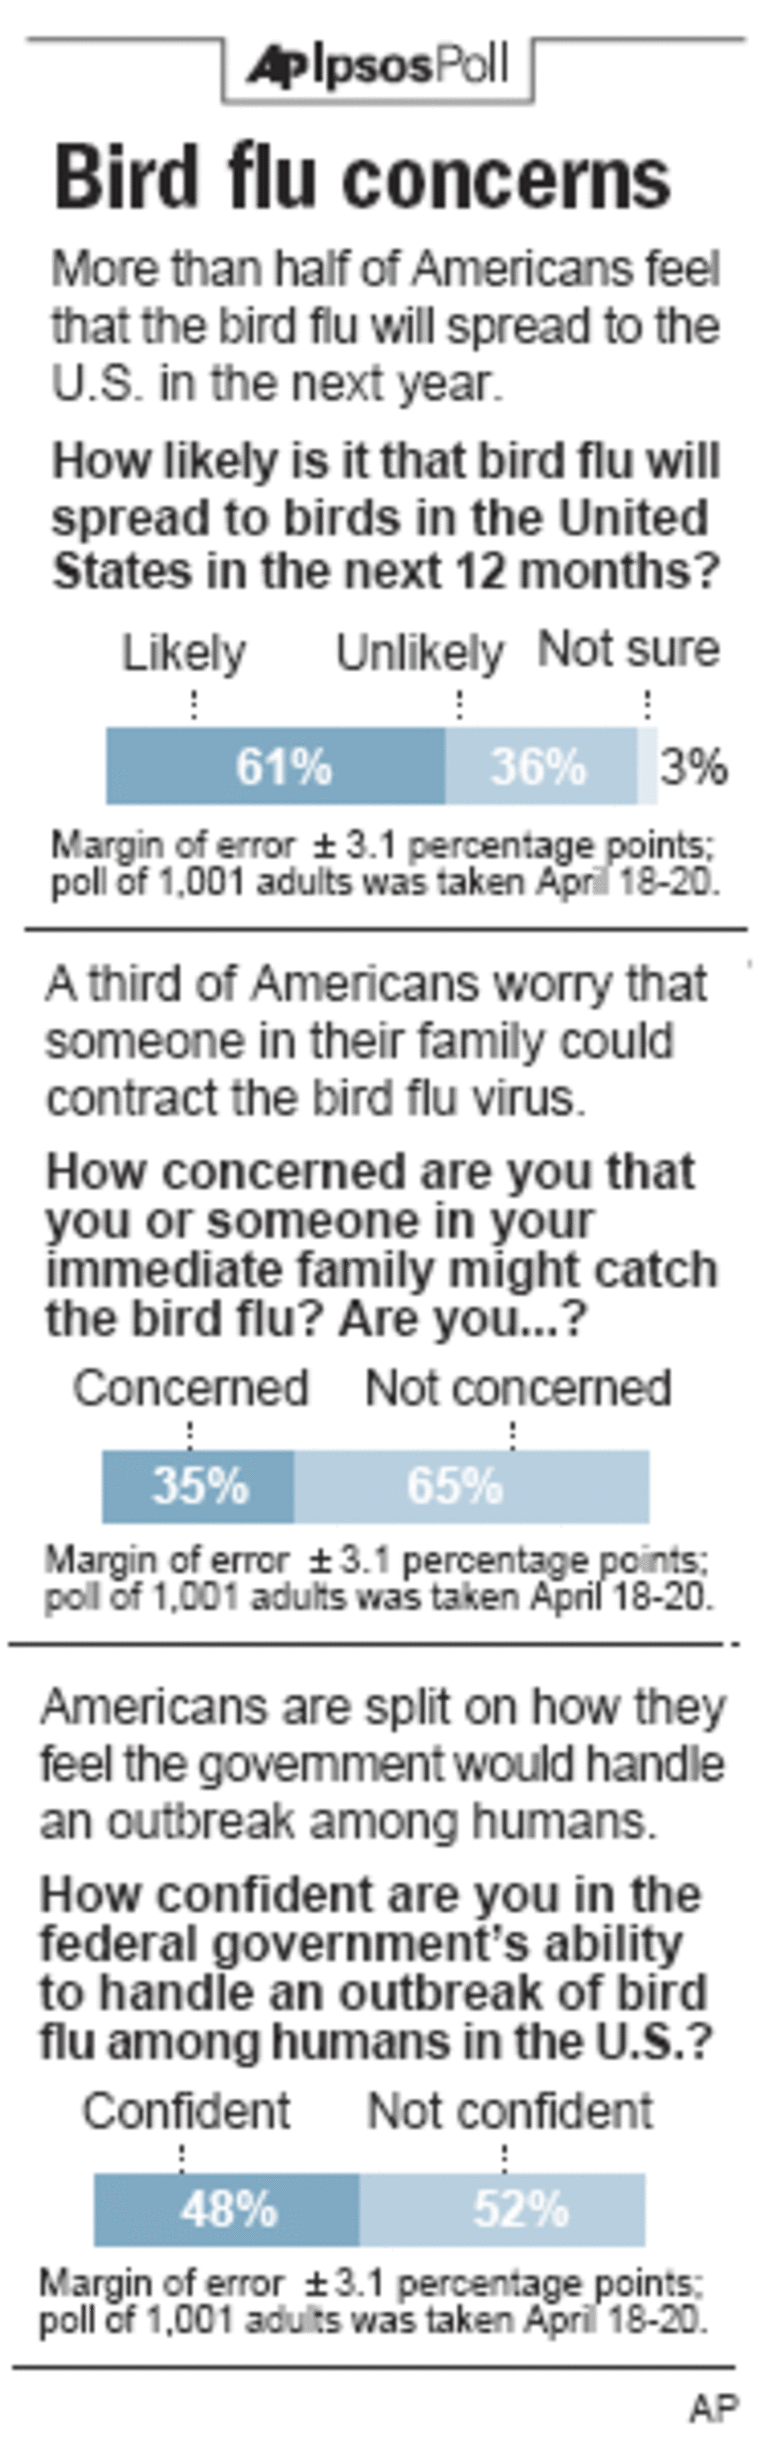 BIRD FLU POLL